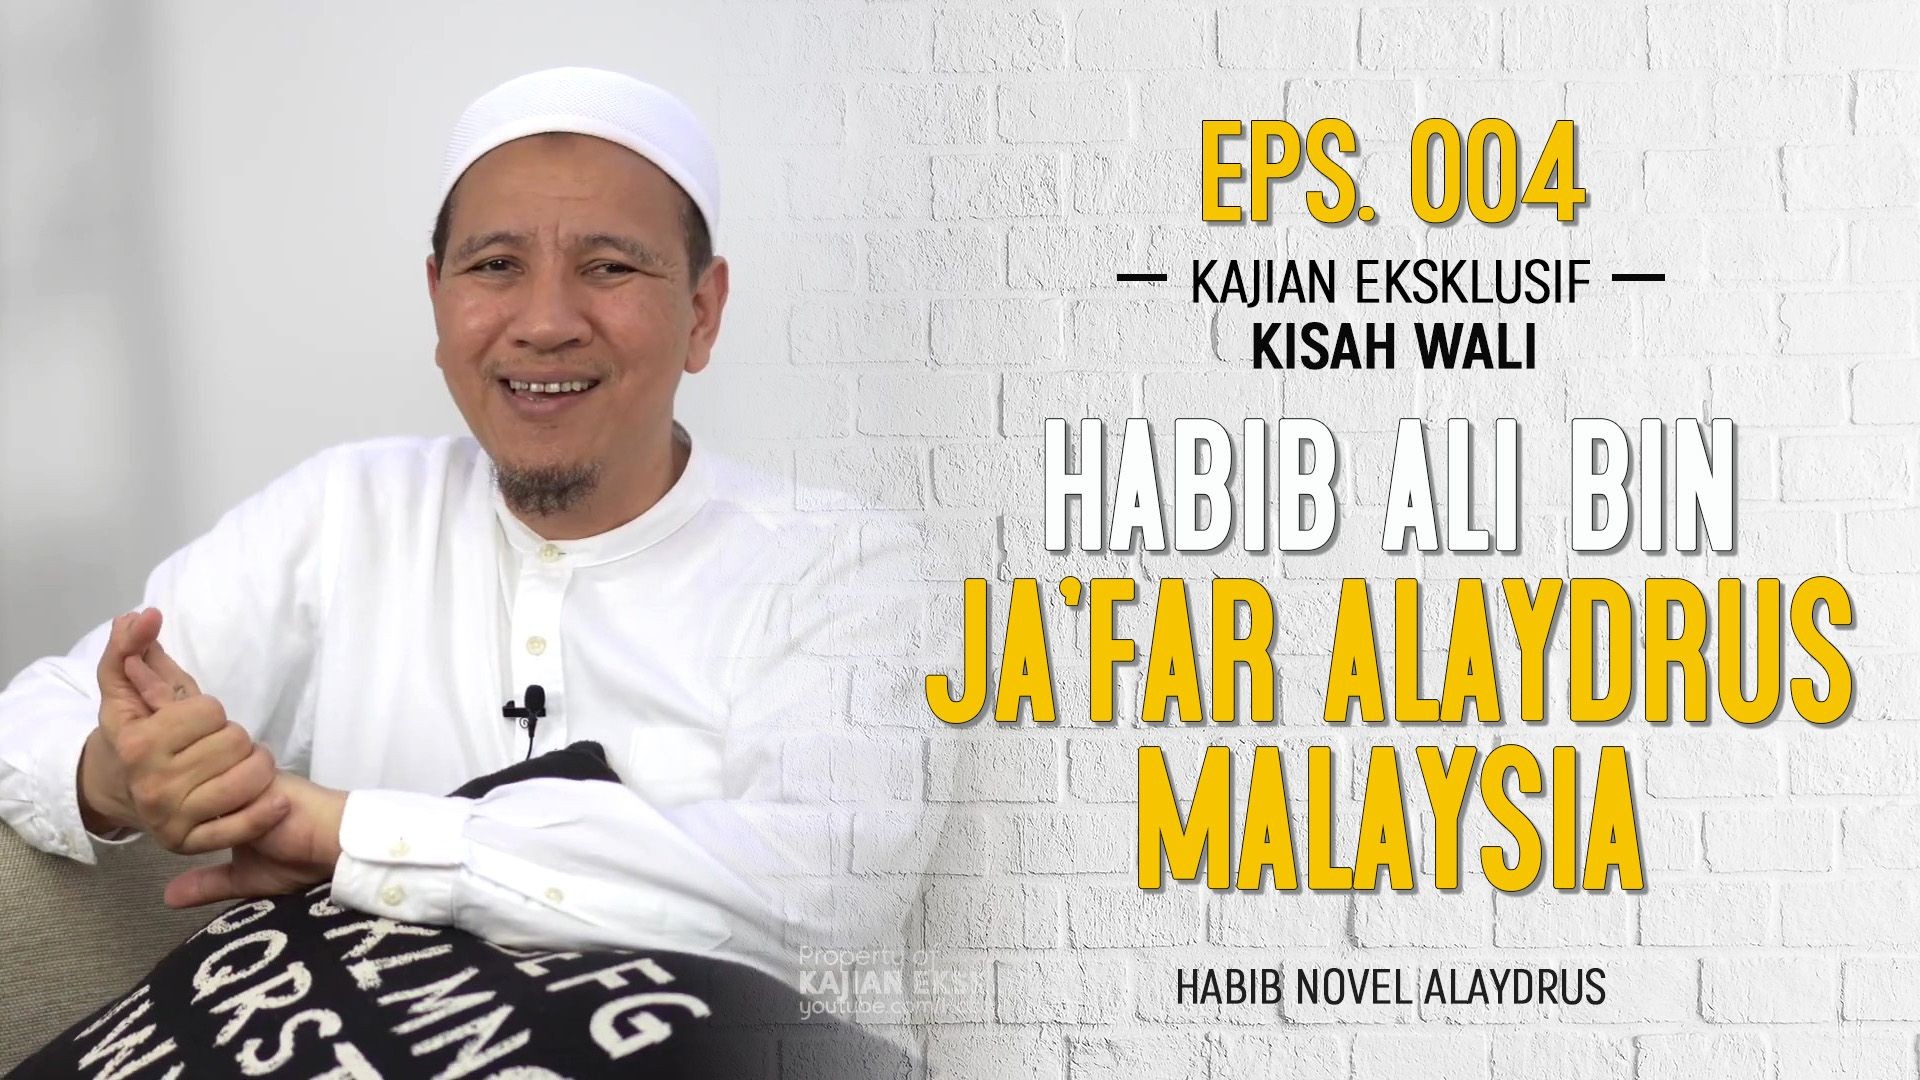 HABIB ALI BIN JA'FAR ALAYDRUS MALAYSIA